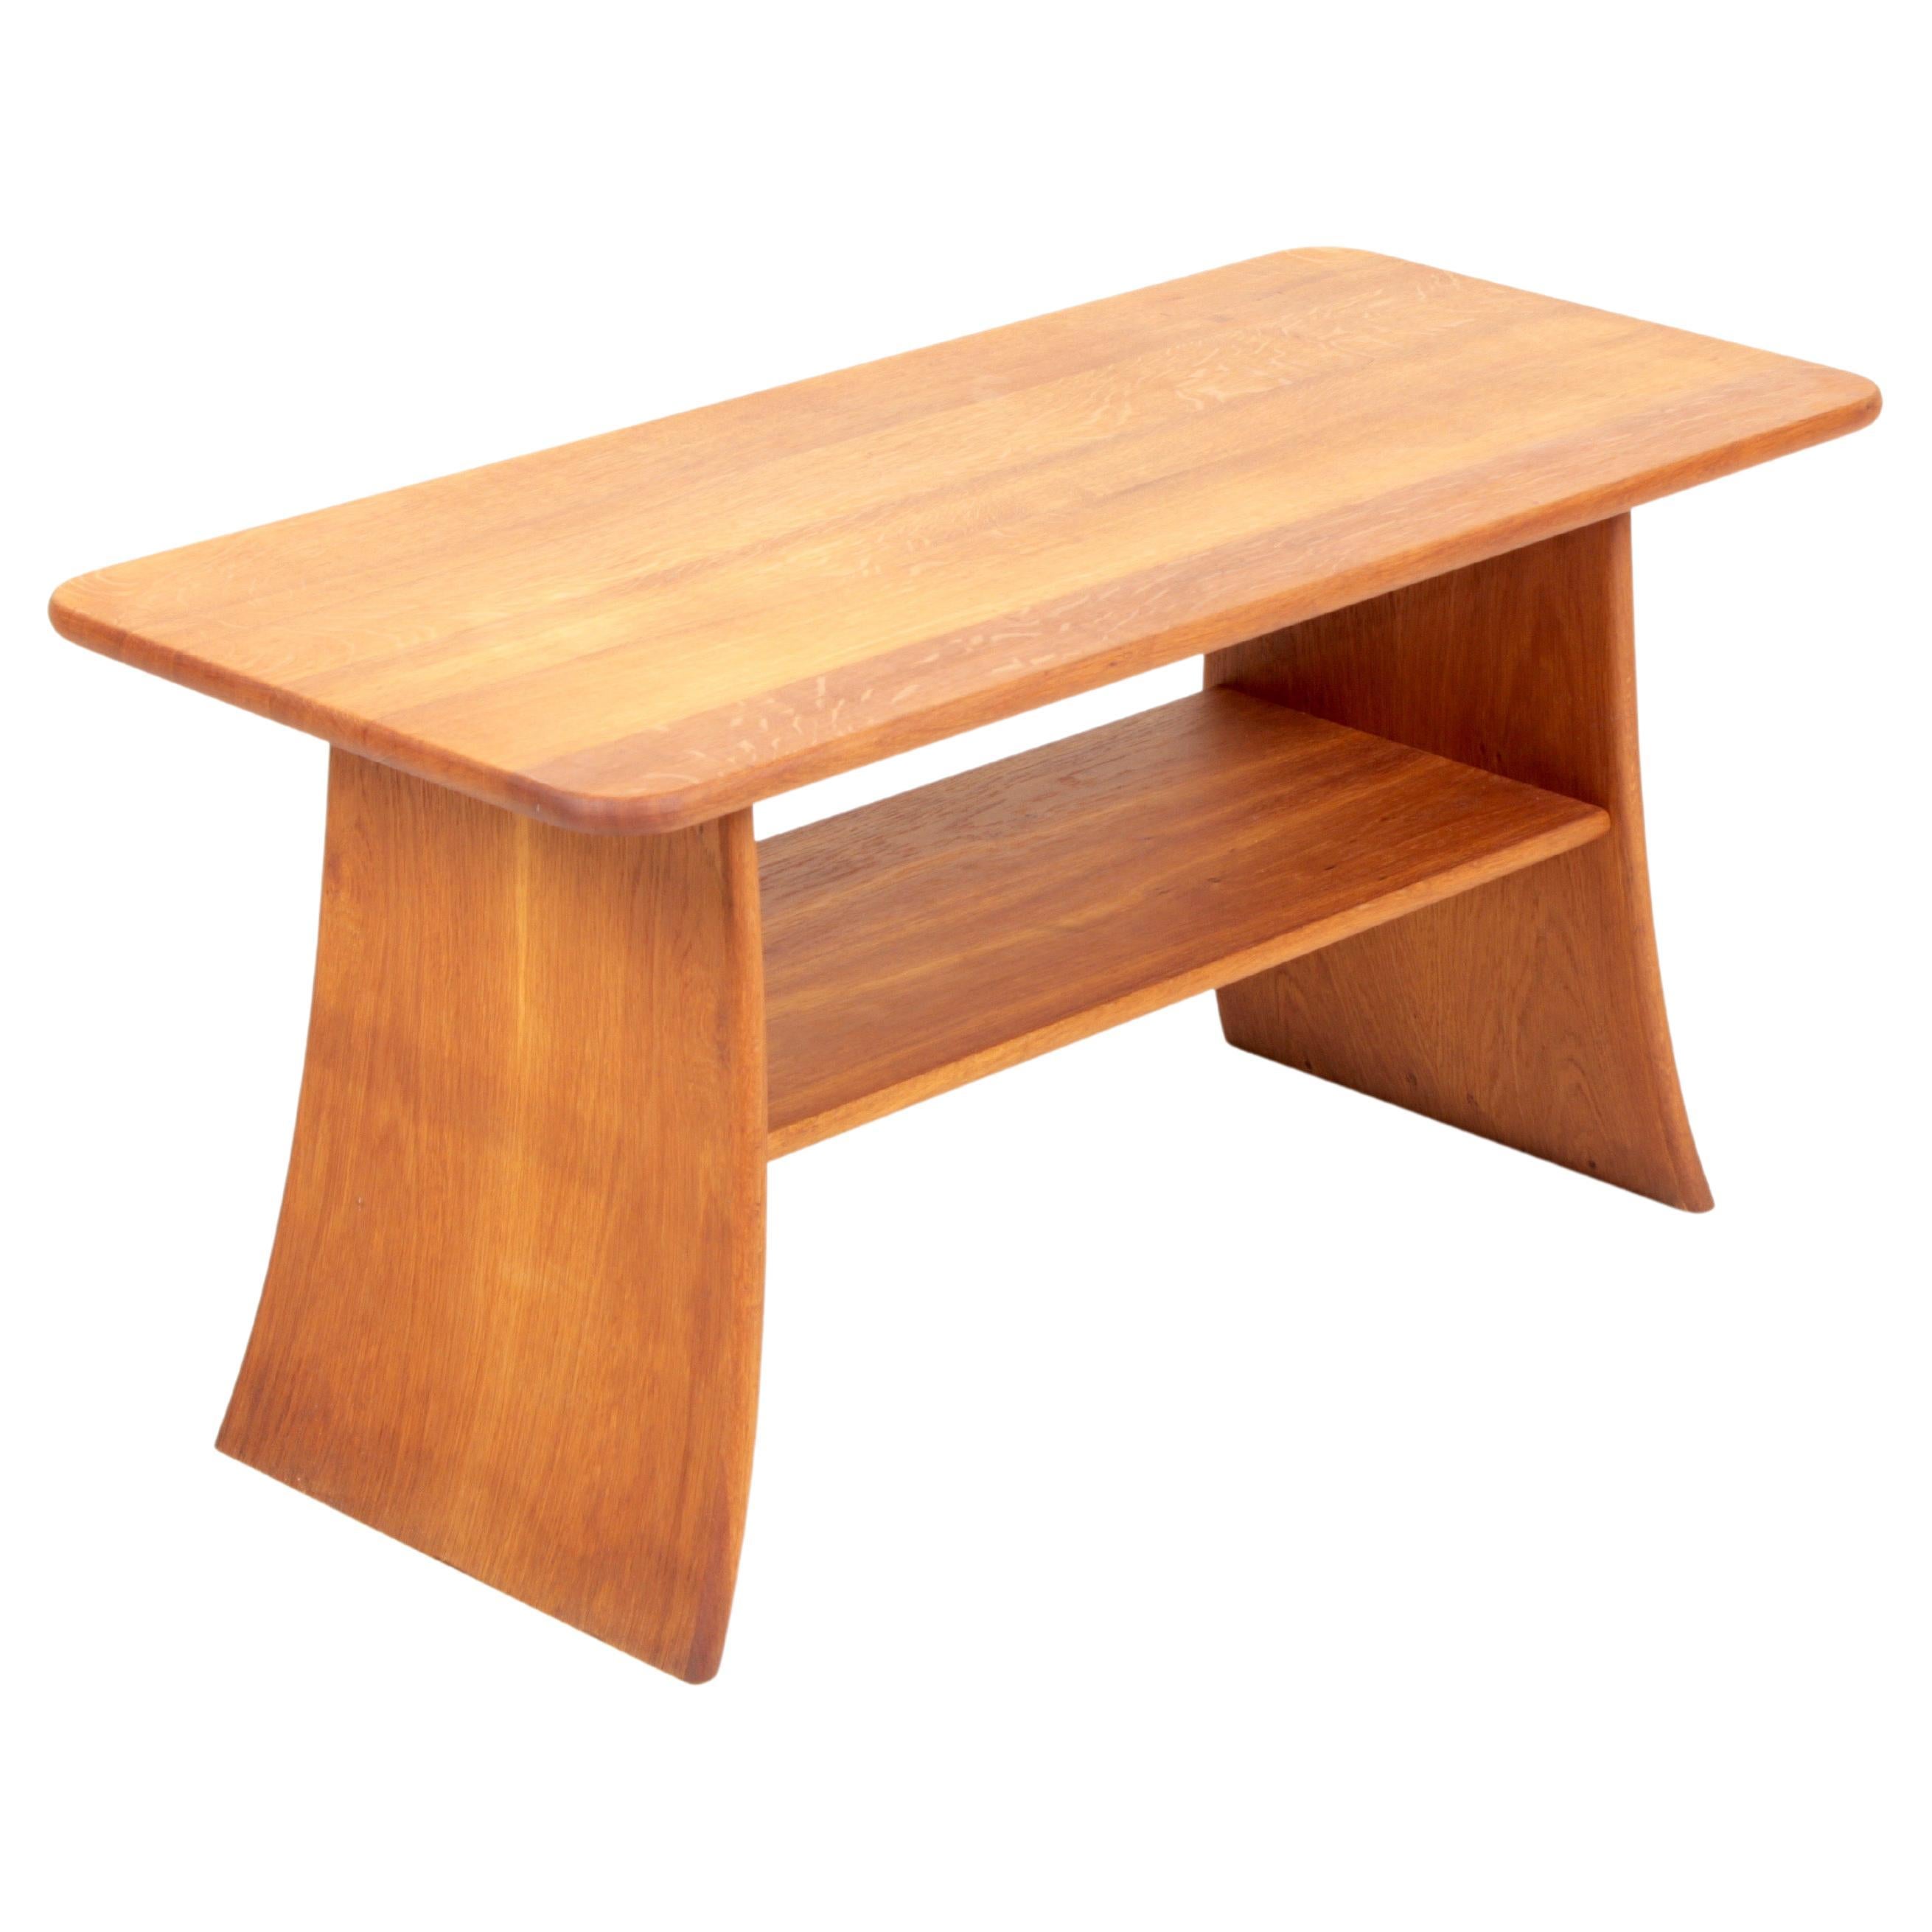 Midcentury Low Table in Solid Oak, Danish Cabinetmaker, 1950s